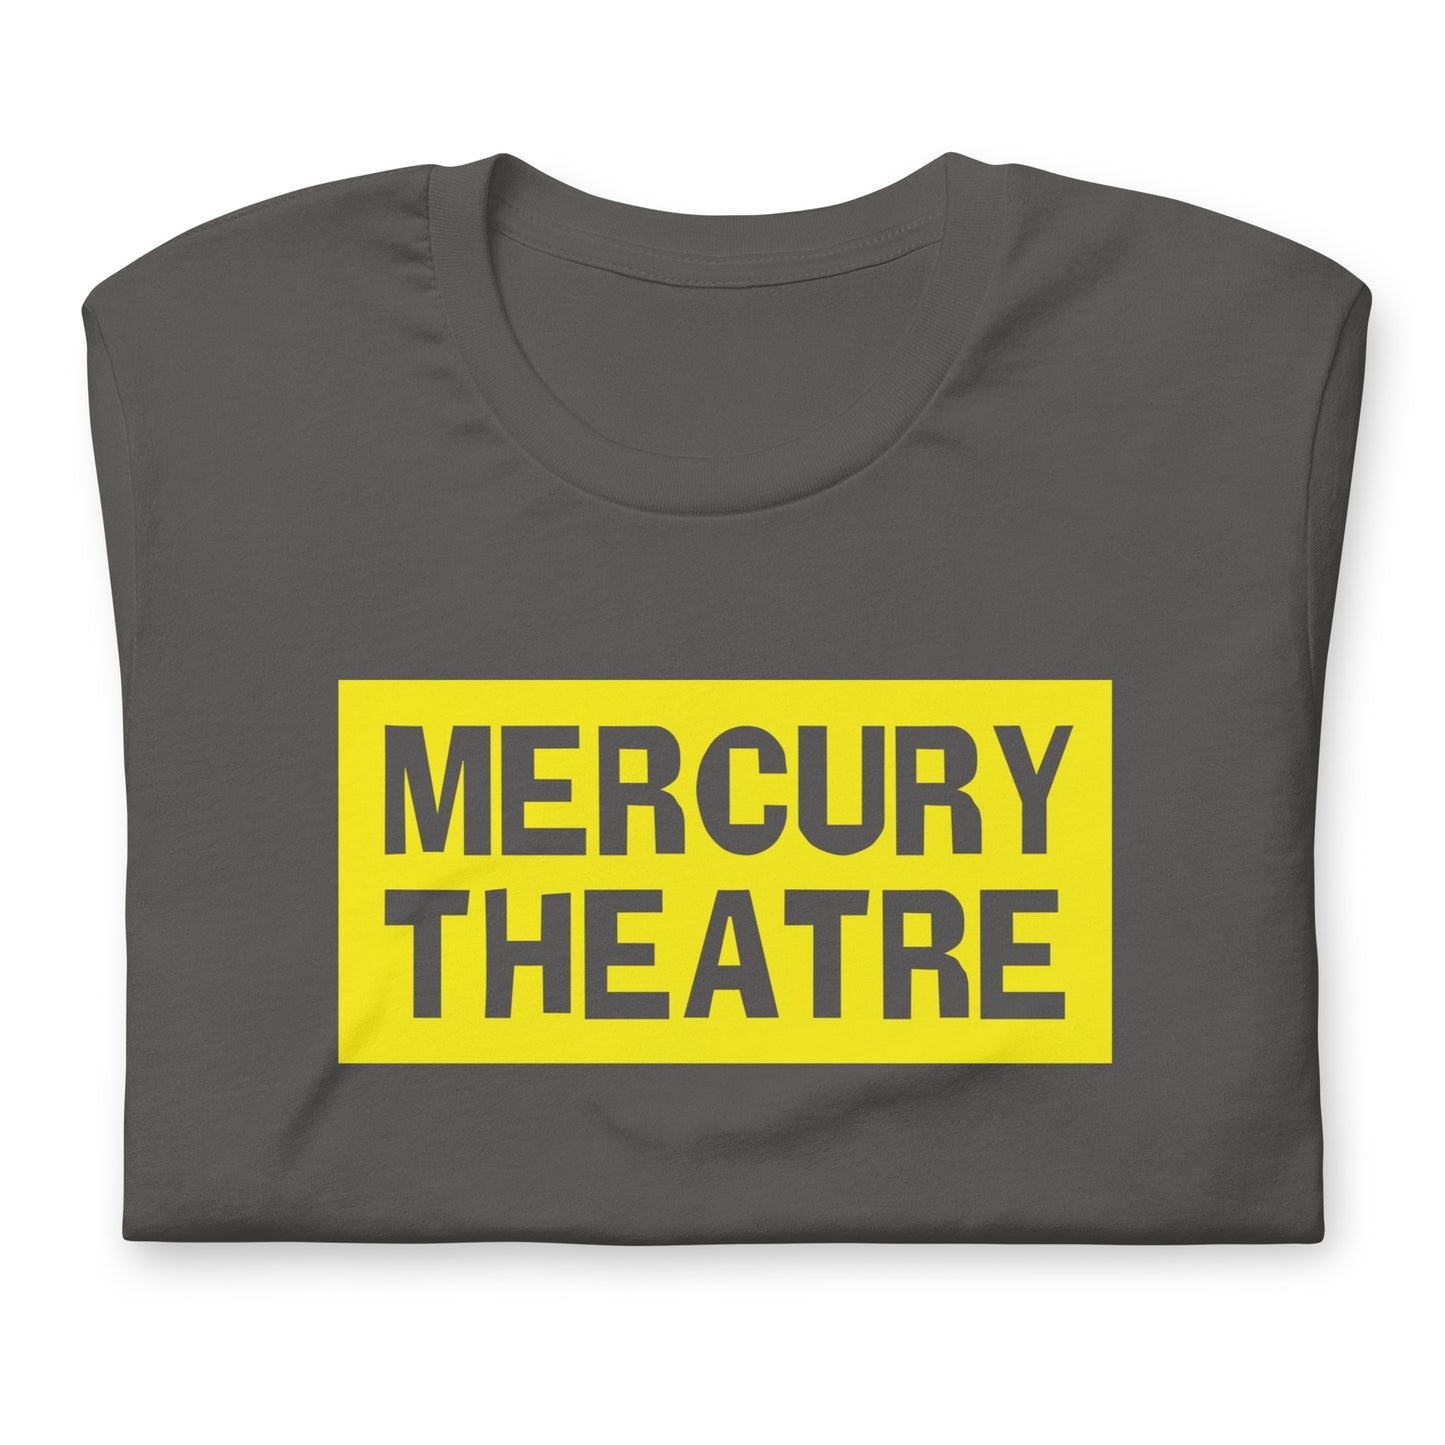 Mercury Theatre unisex printed t-shirt